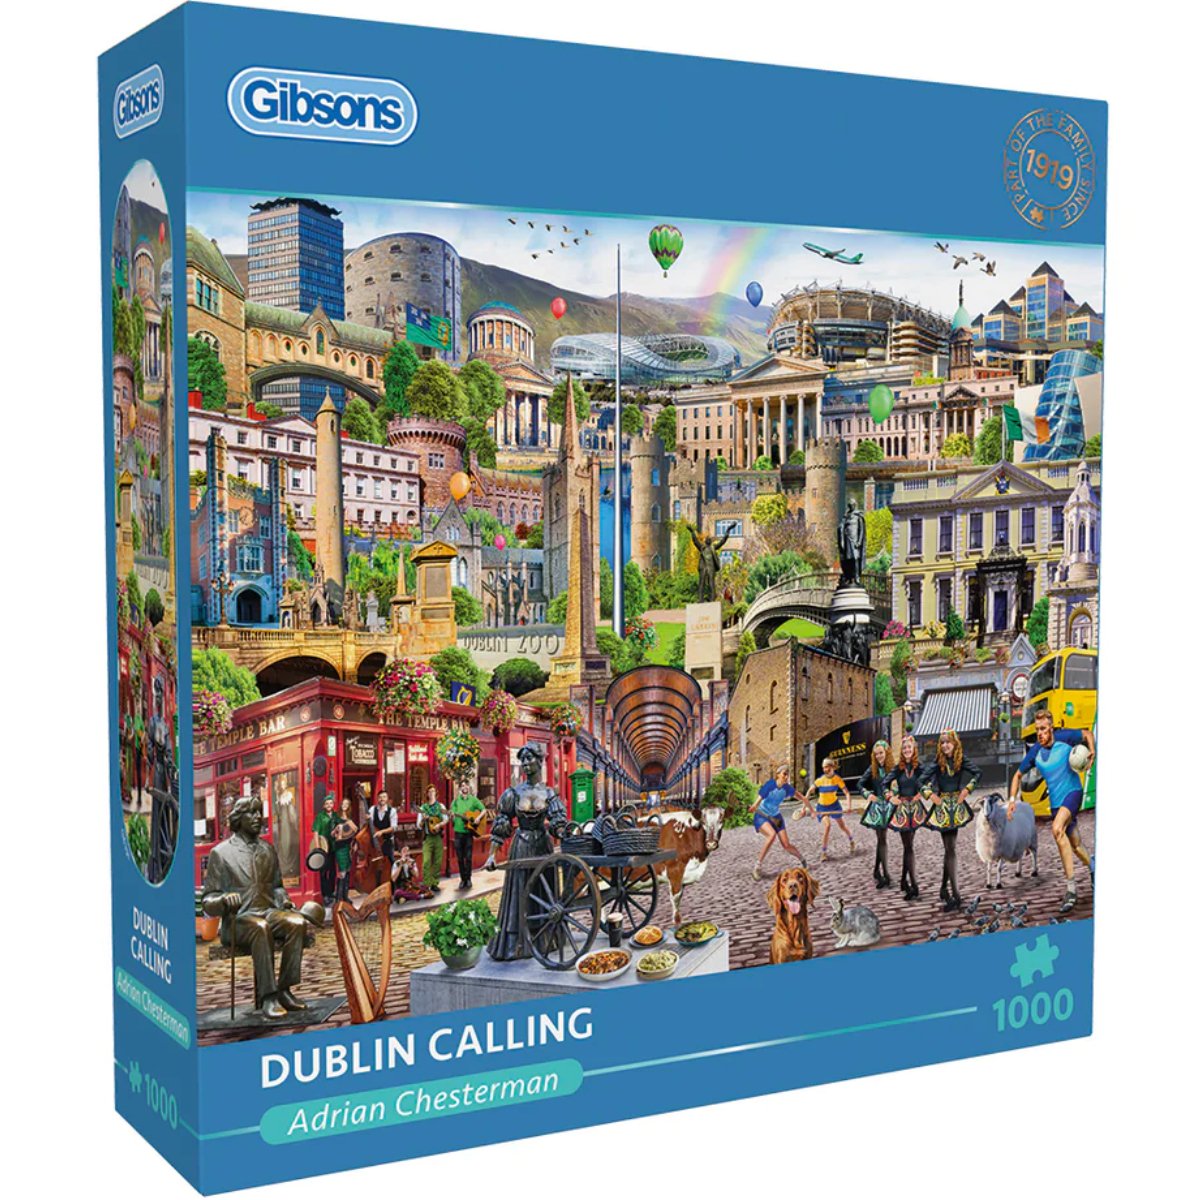 Gibsons Dublin Calling 1000 Piece Jigsaw Puzzle - Box